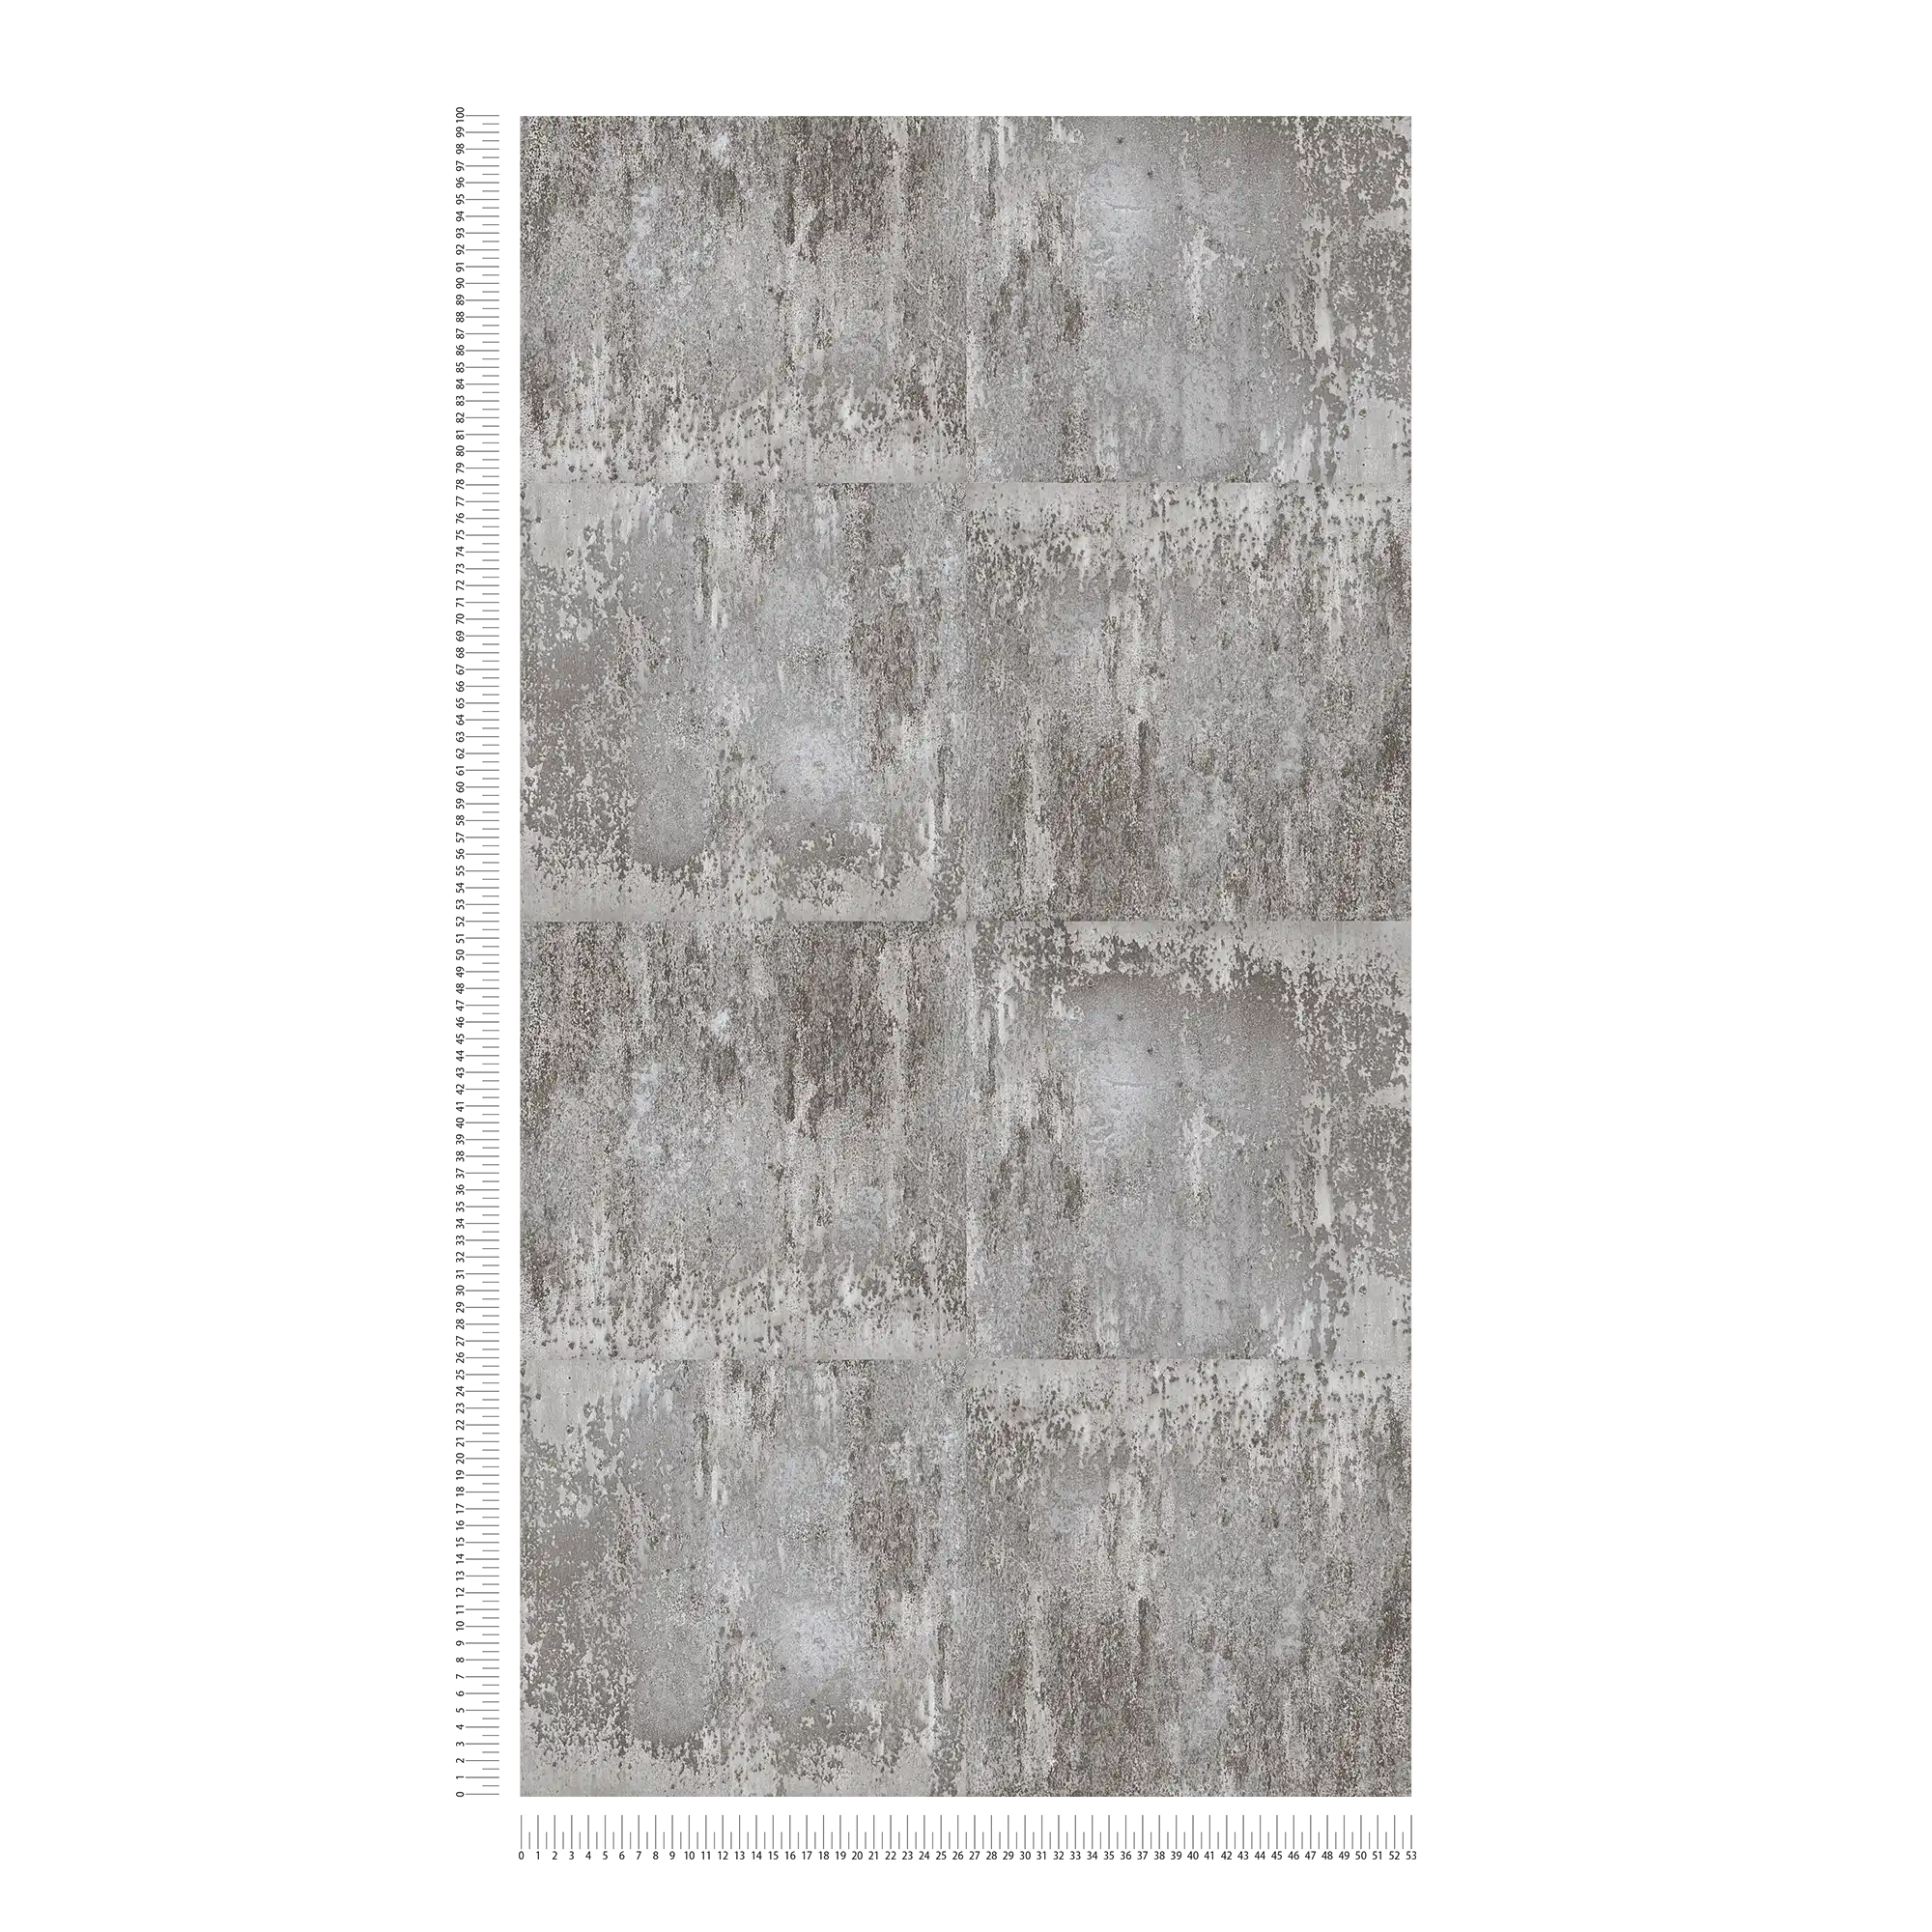             Self-adhesive wallpaper | rust look design with metallic effect - grey
        